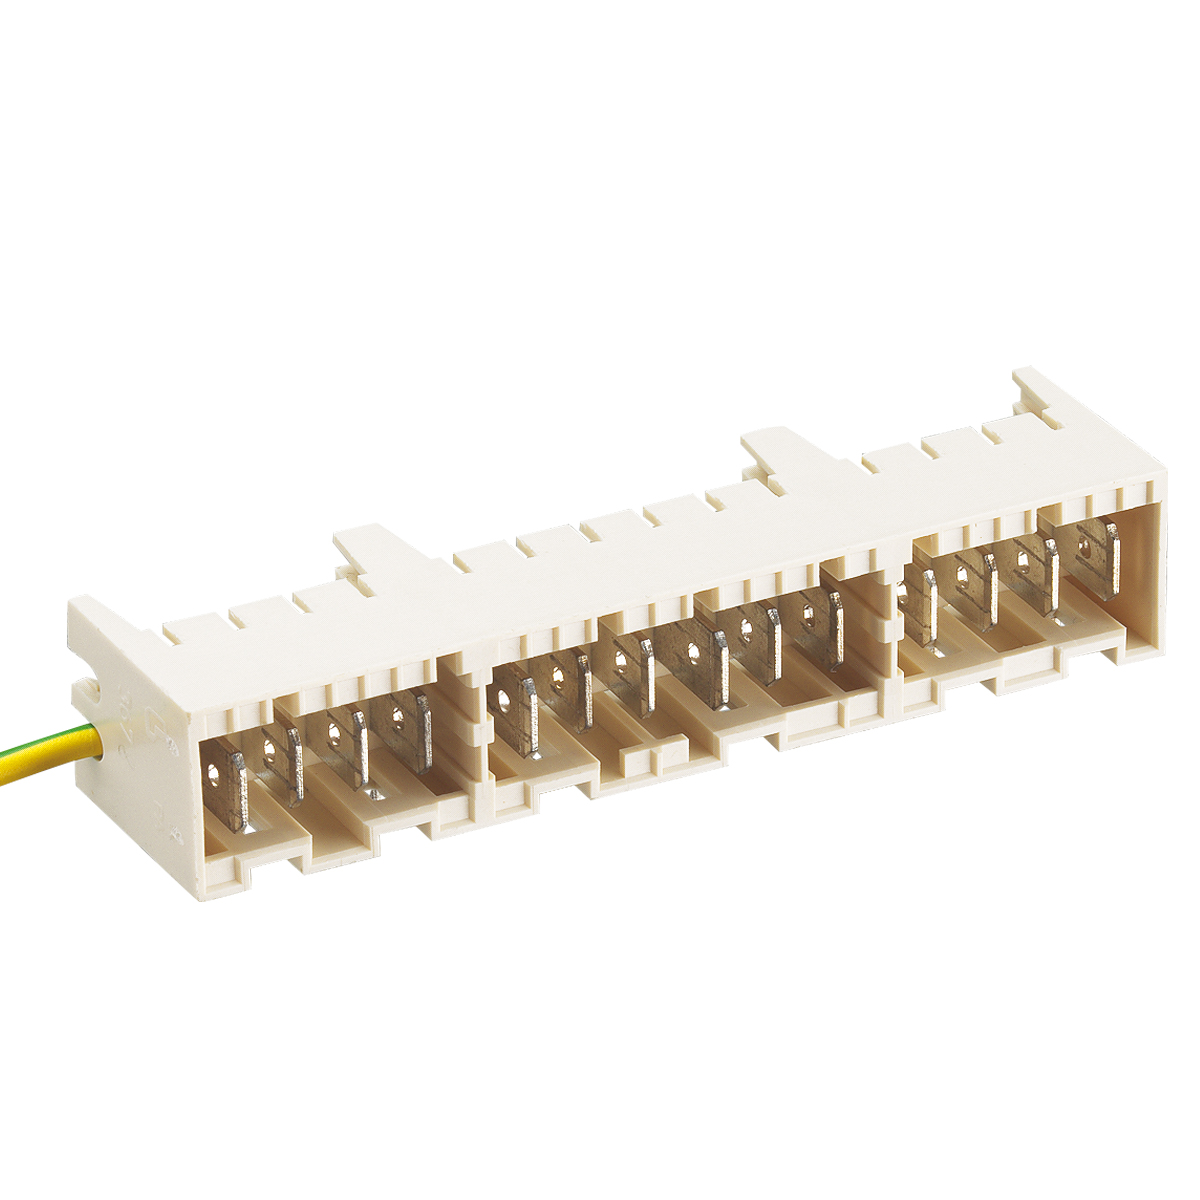 Lumberg: 3678 (Series 36 | RAST 5 connectors, pitch 5.0 mm)